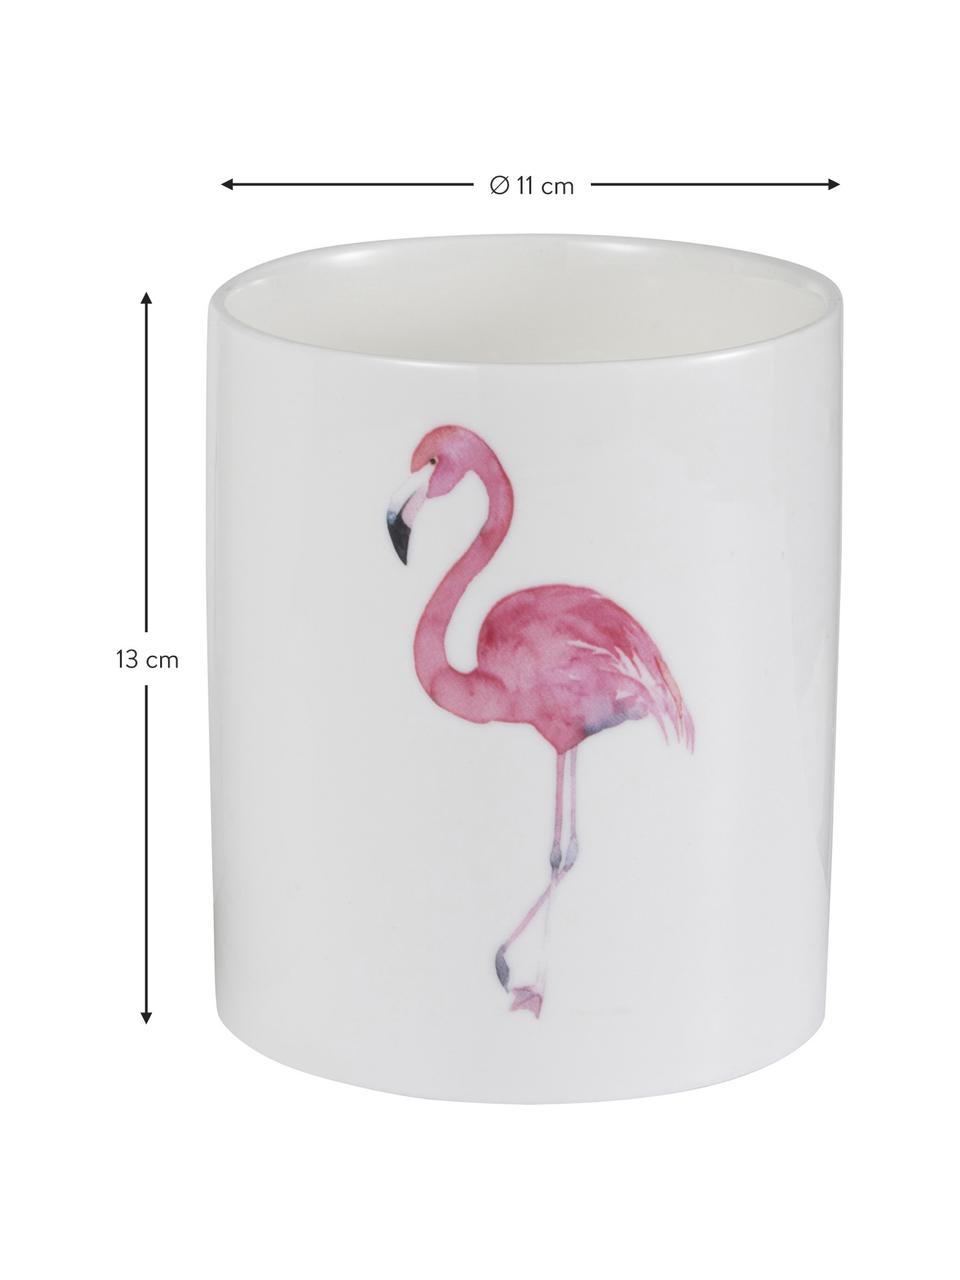 Geurkaars Flamingo, Houder: keramiek, Wit, roze, Ø 11 x H 13 cm